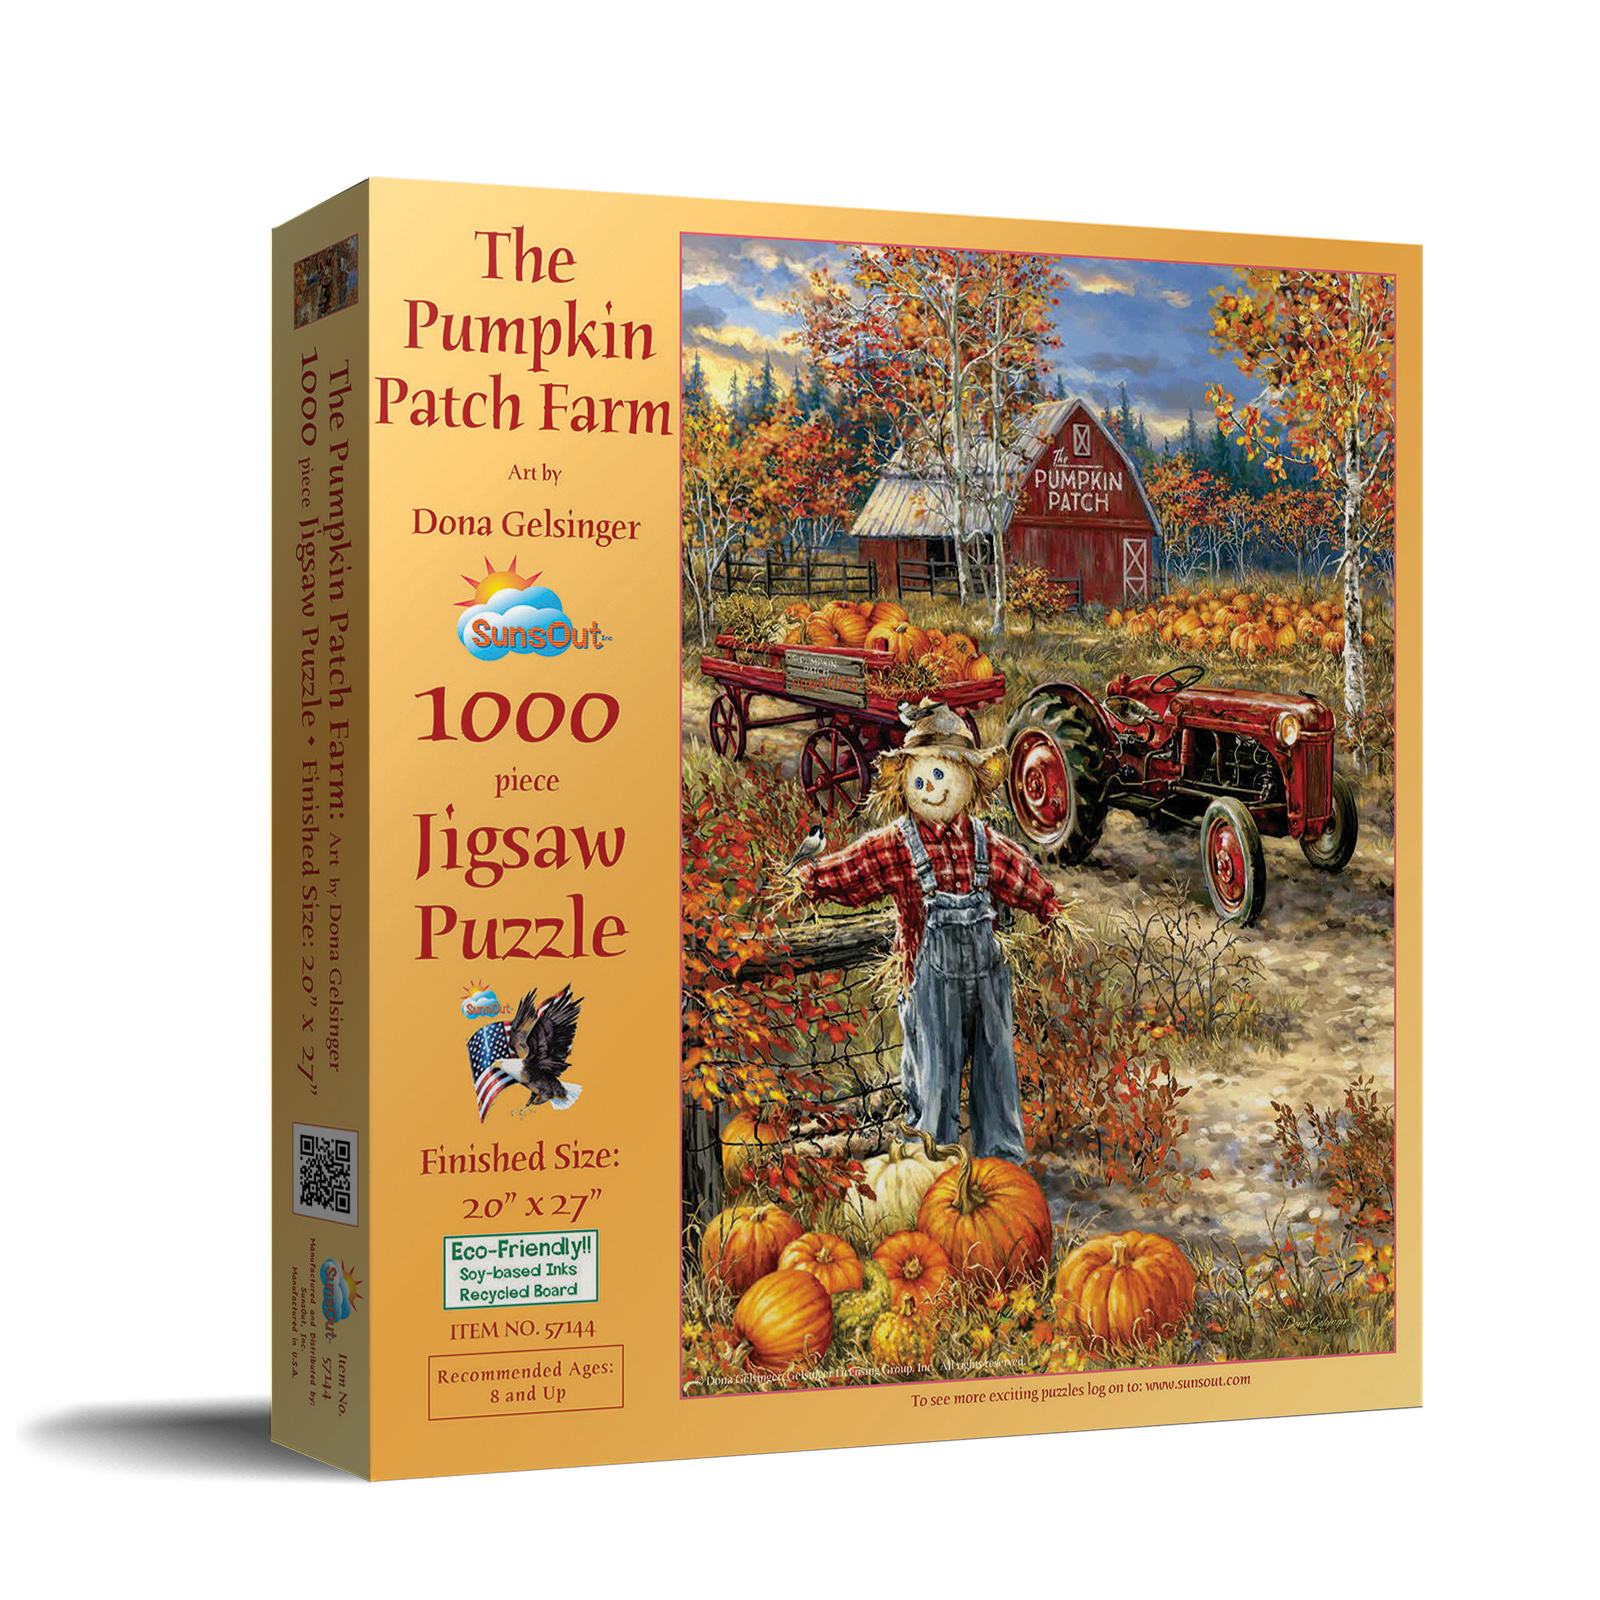 The Pumpkin Patch Farm